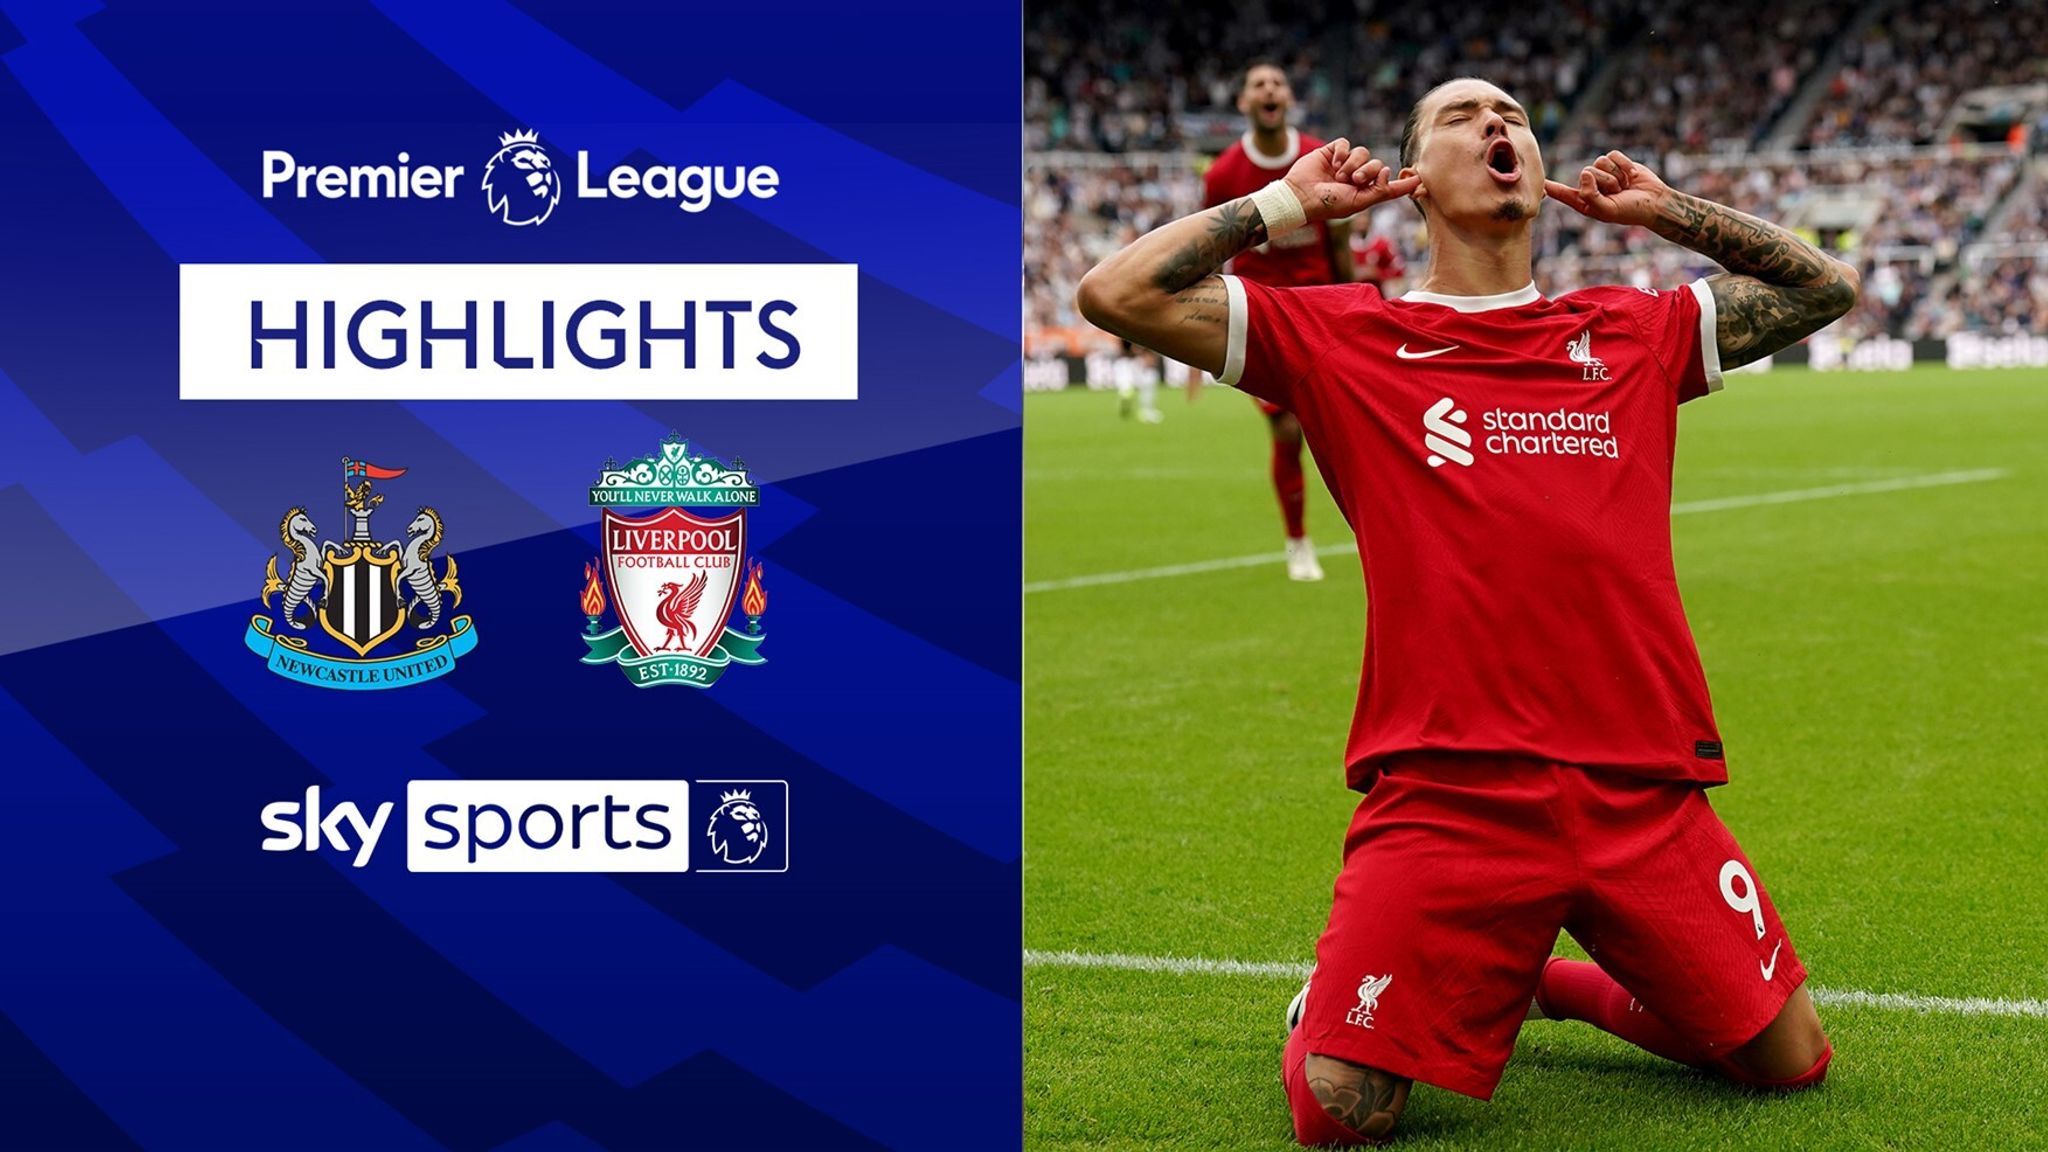 Newcastle 1-2 Liverpool Premier League highlights Video Watch TV Show Sky Sports